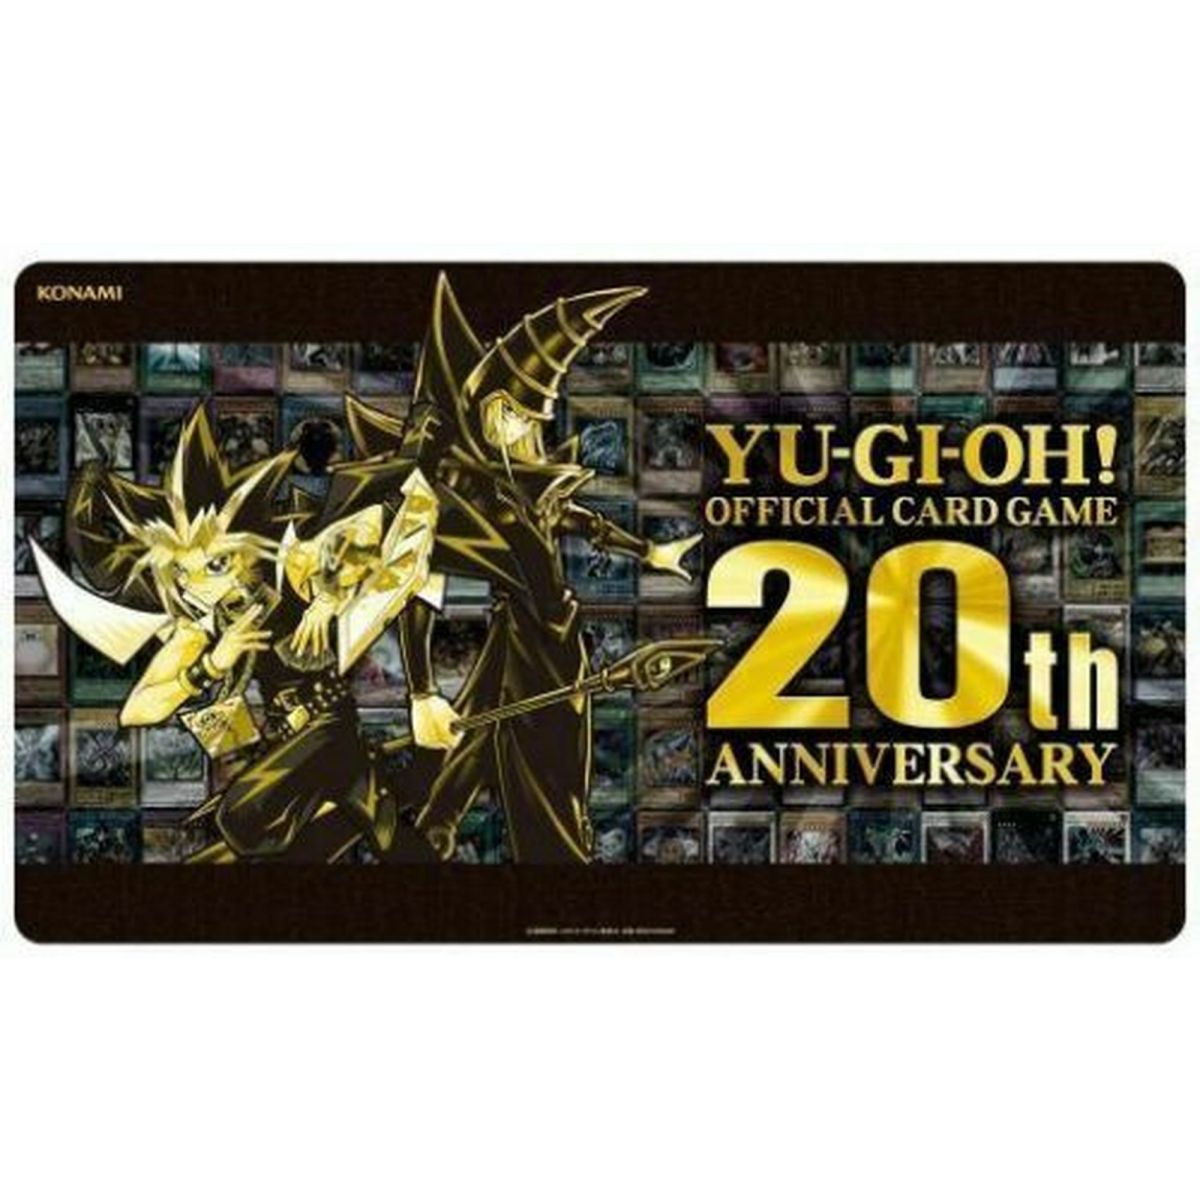 Yu Gi Oh! - Playmat - Limited Edition 20th Anniversary - OCG